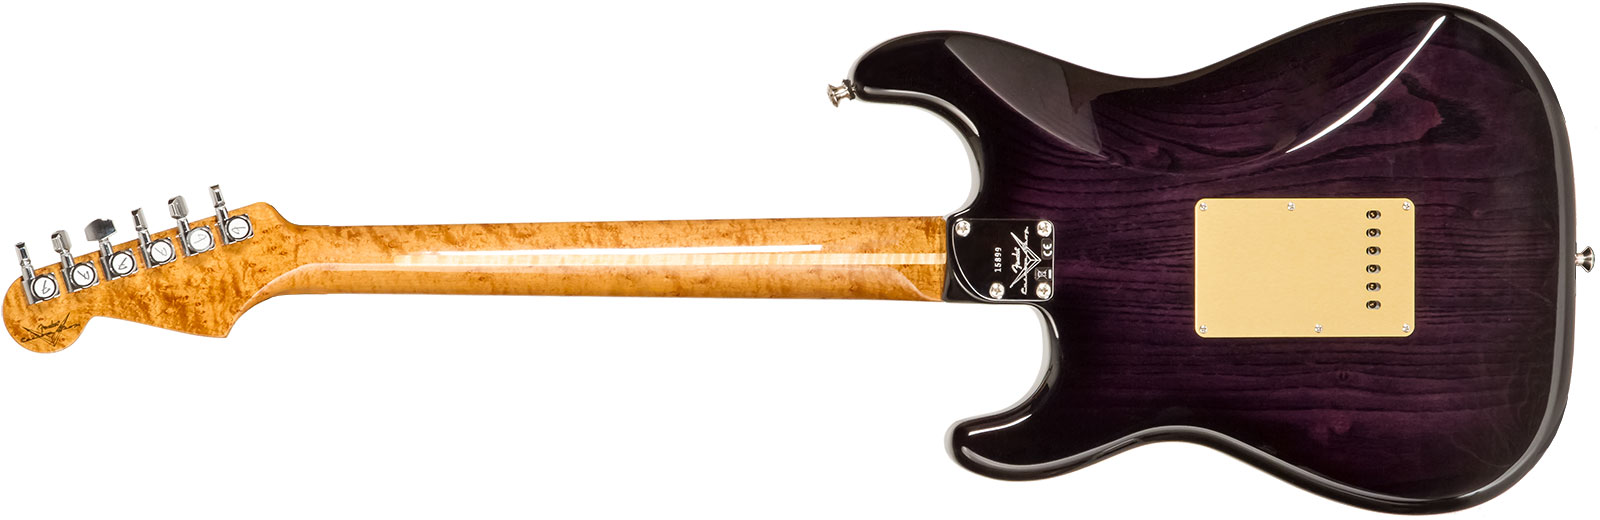 Fender Custom Shop Strat American Custom 3s Trem Mn #xn15899 - Nos Ebony Transparent - E-Gitarre in Str-Form - Variation 1